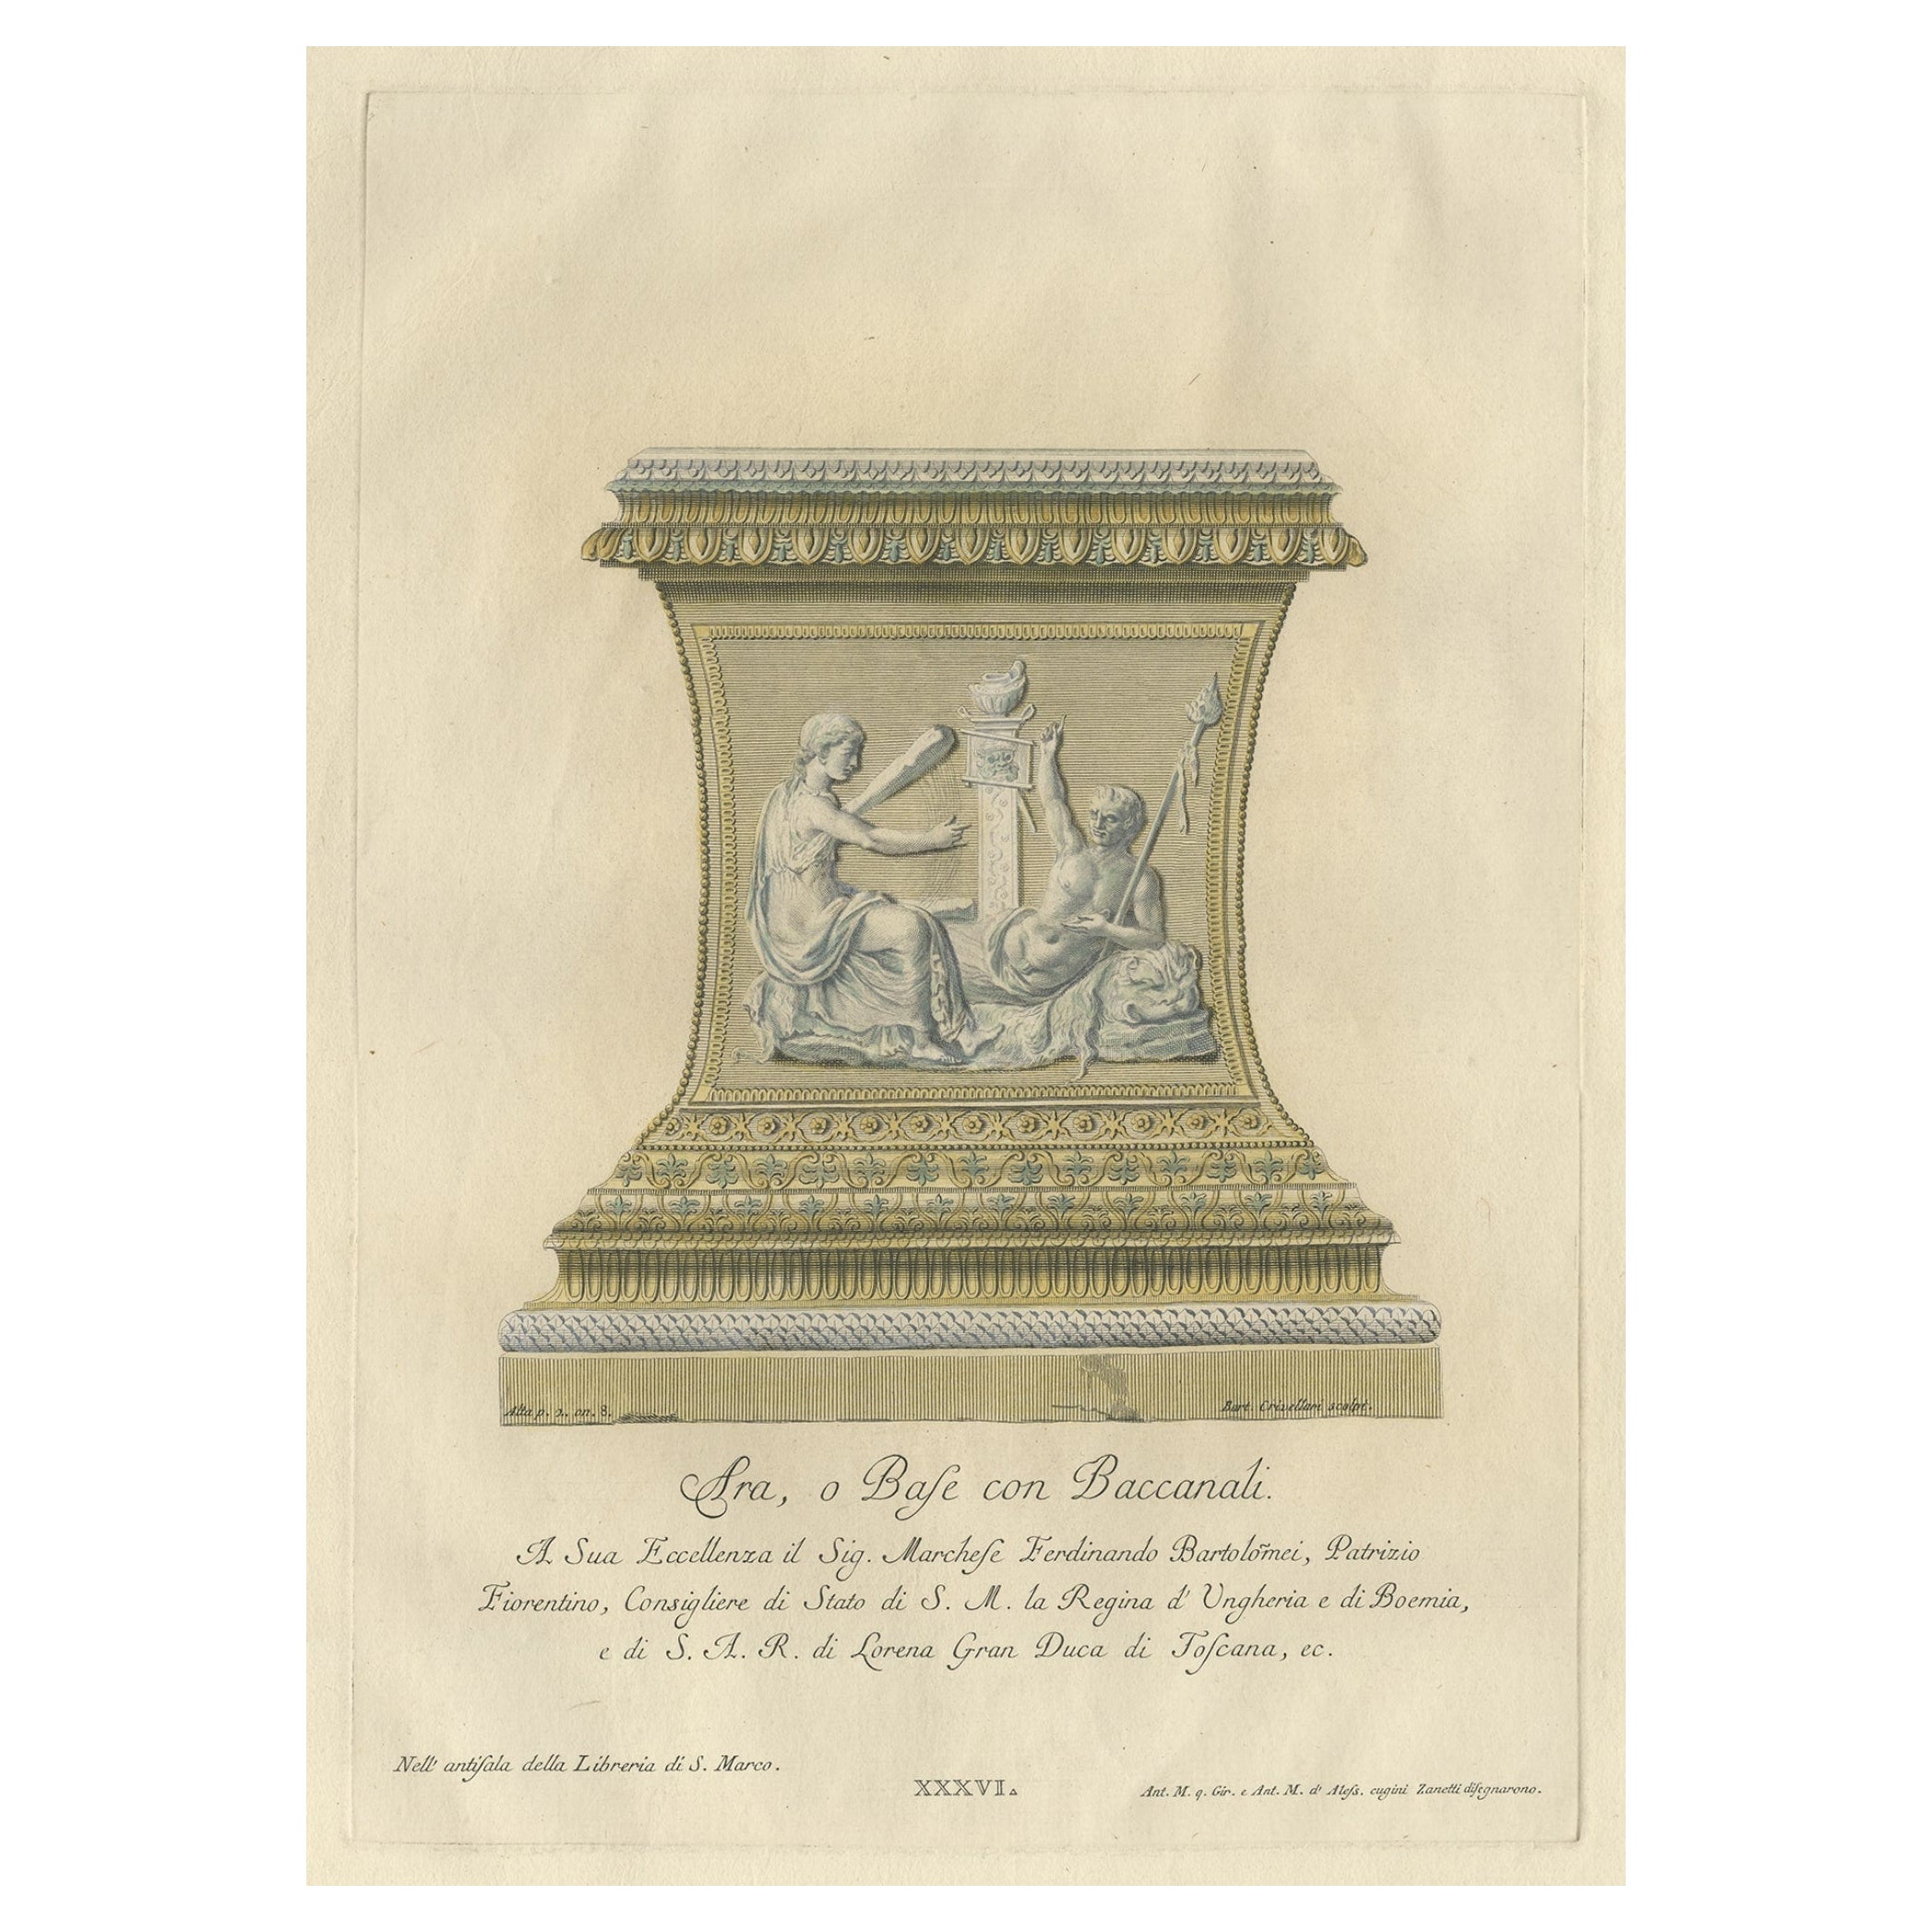 Rare Antique Engraving of a Large Ornamental Bacchic Altar or Pedestal, 1740